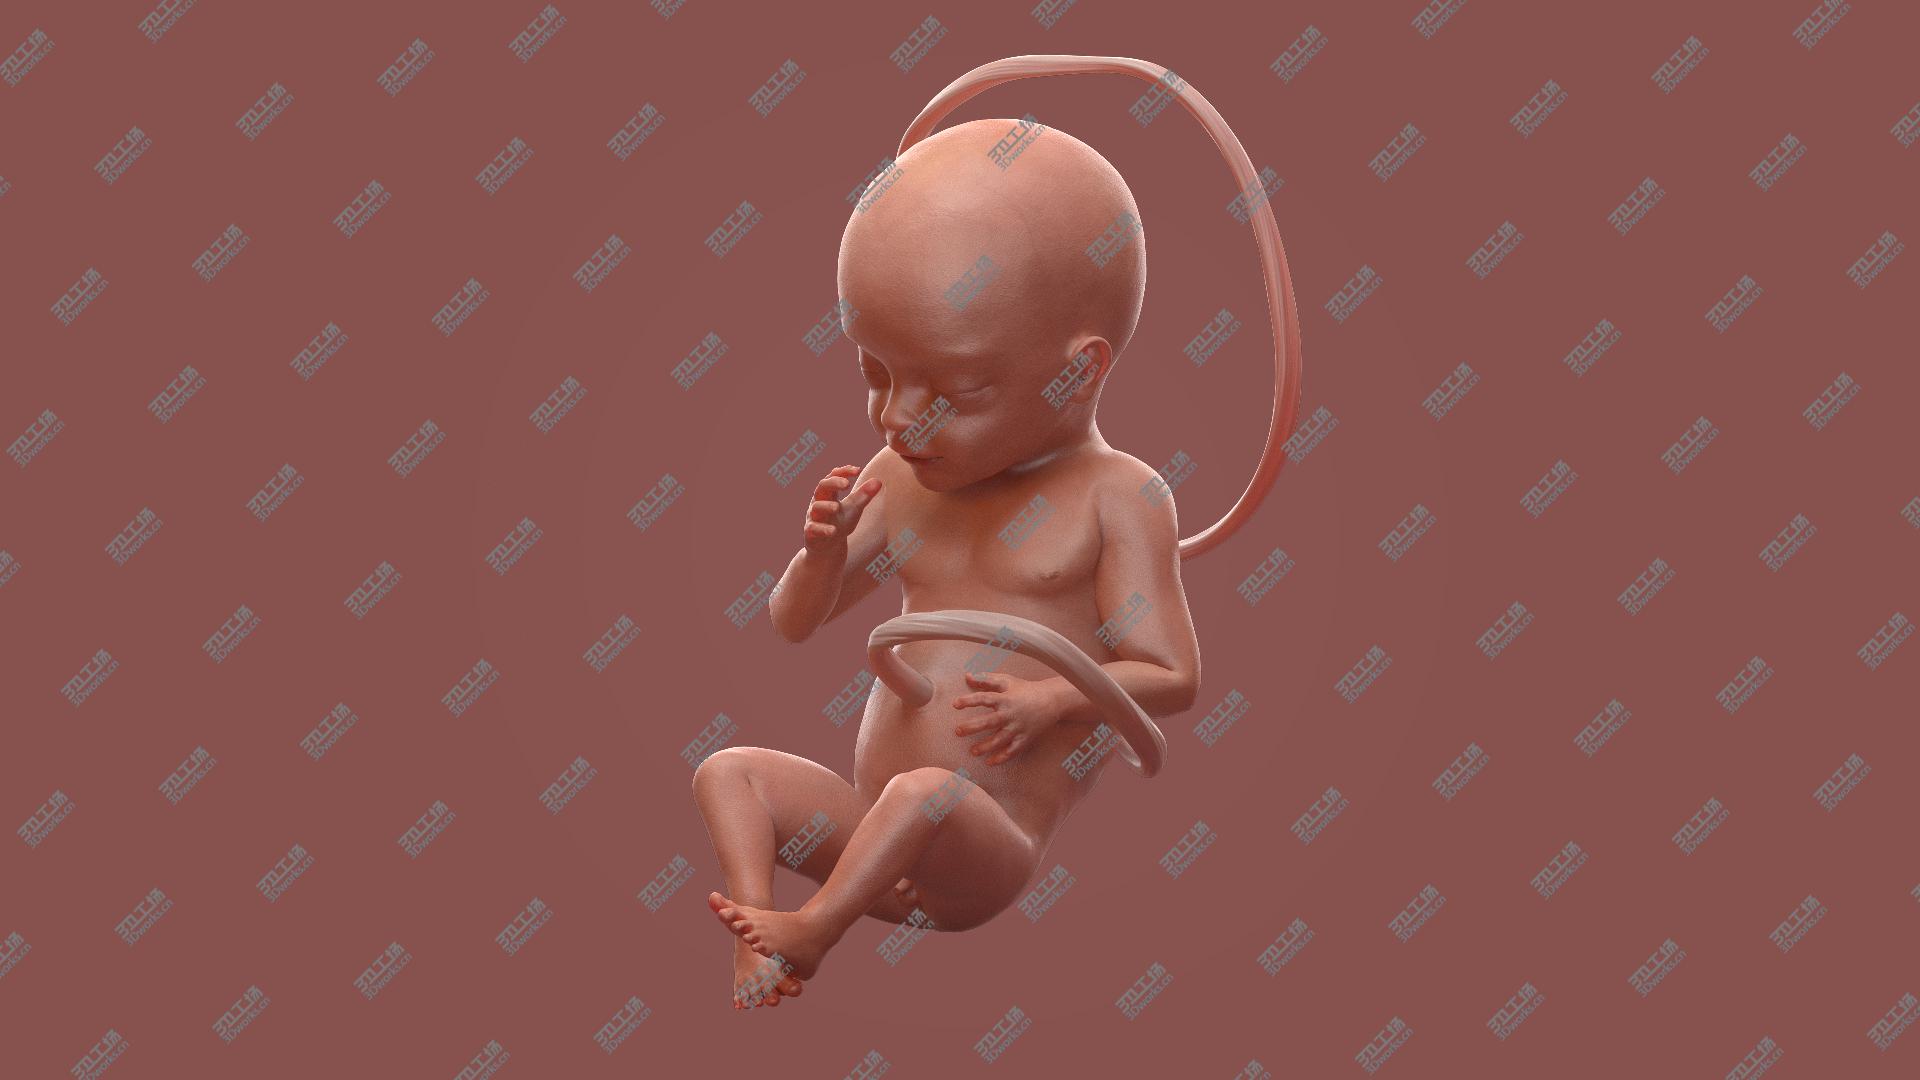 images/goods_img/20210313/3D Human Fetus at 24 Weeks Rigged model/4.jpg